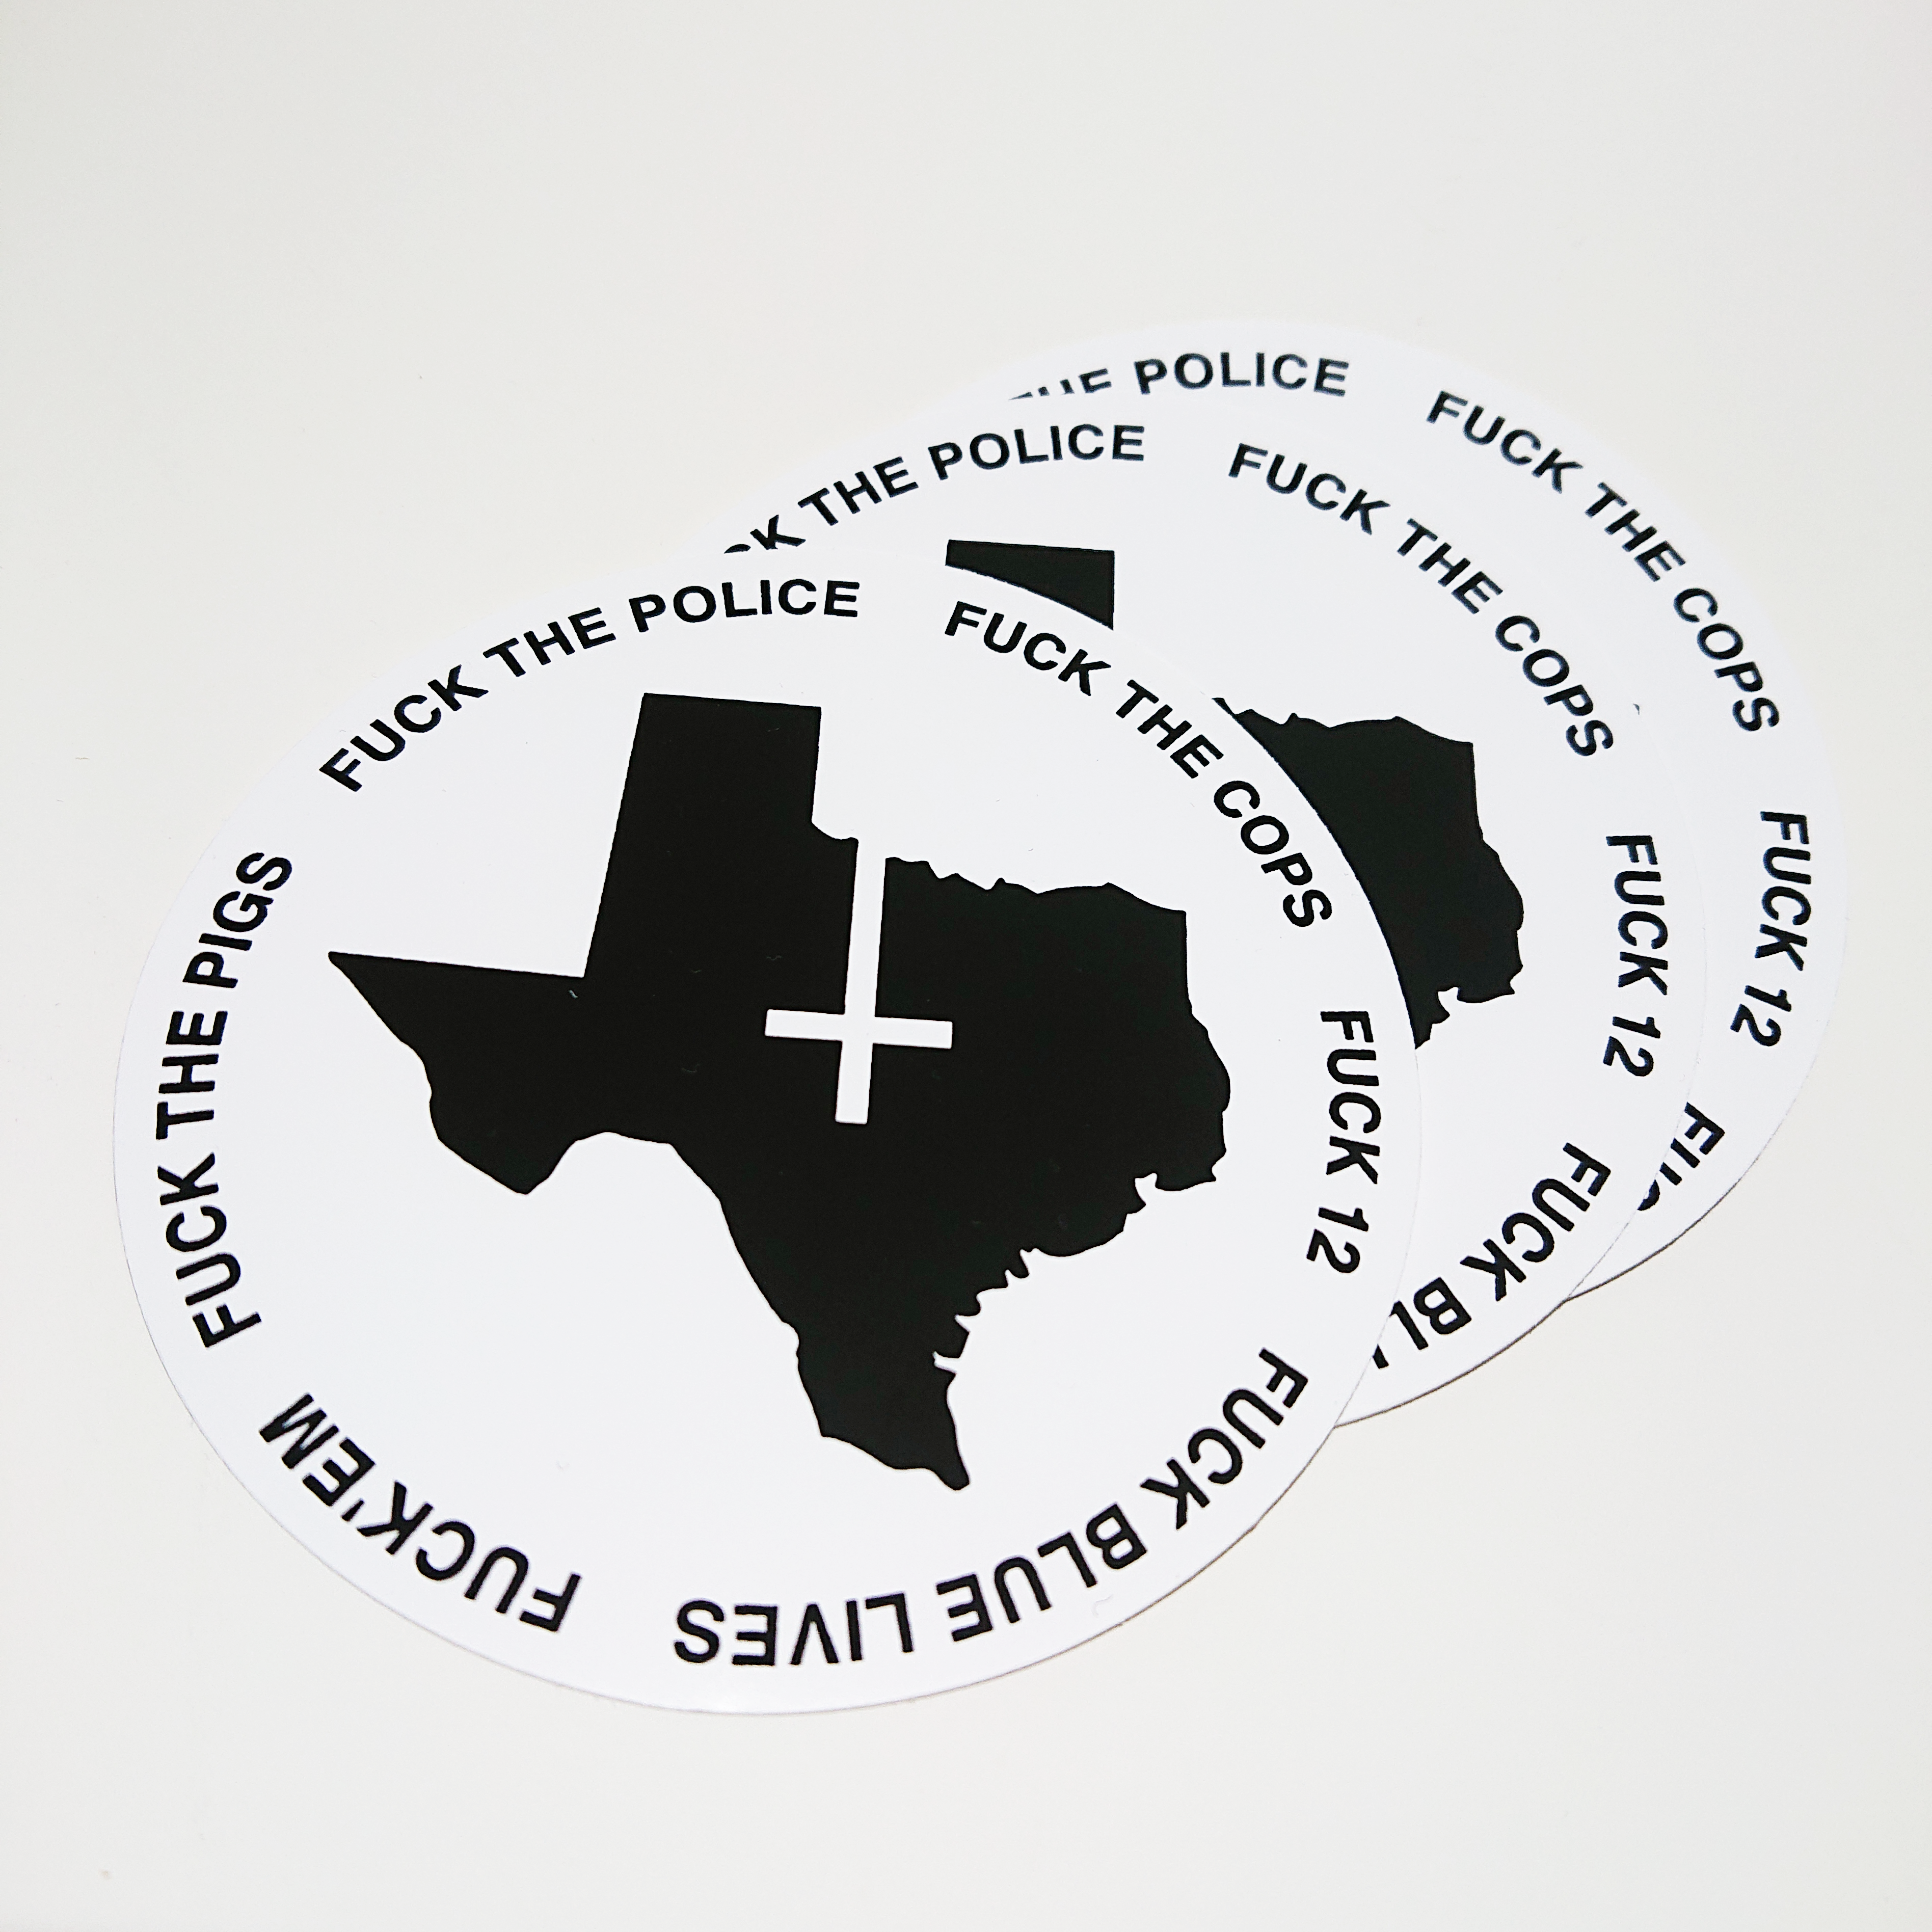 Petrine TX "FUCK THE COPS" vinyl stickers (x3)